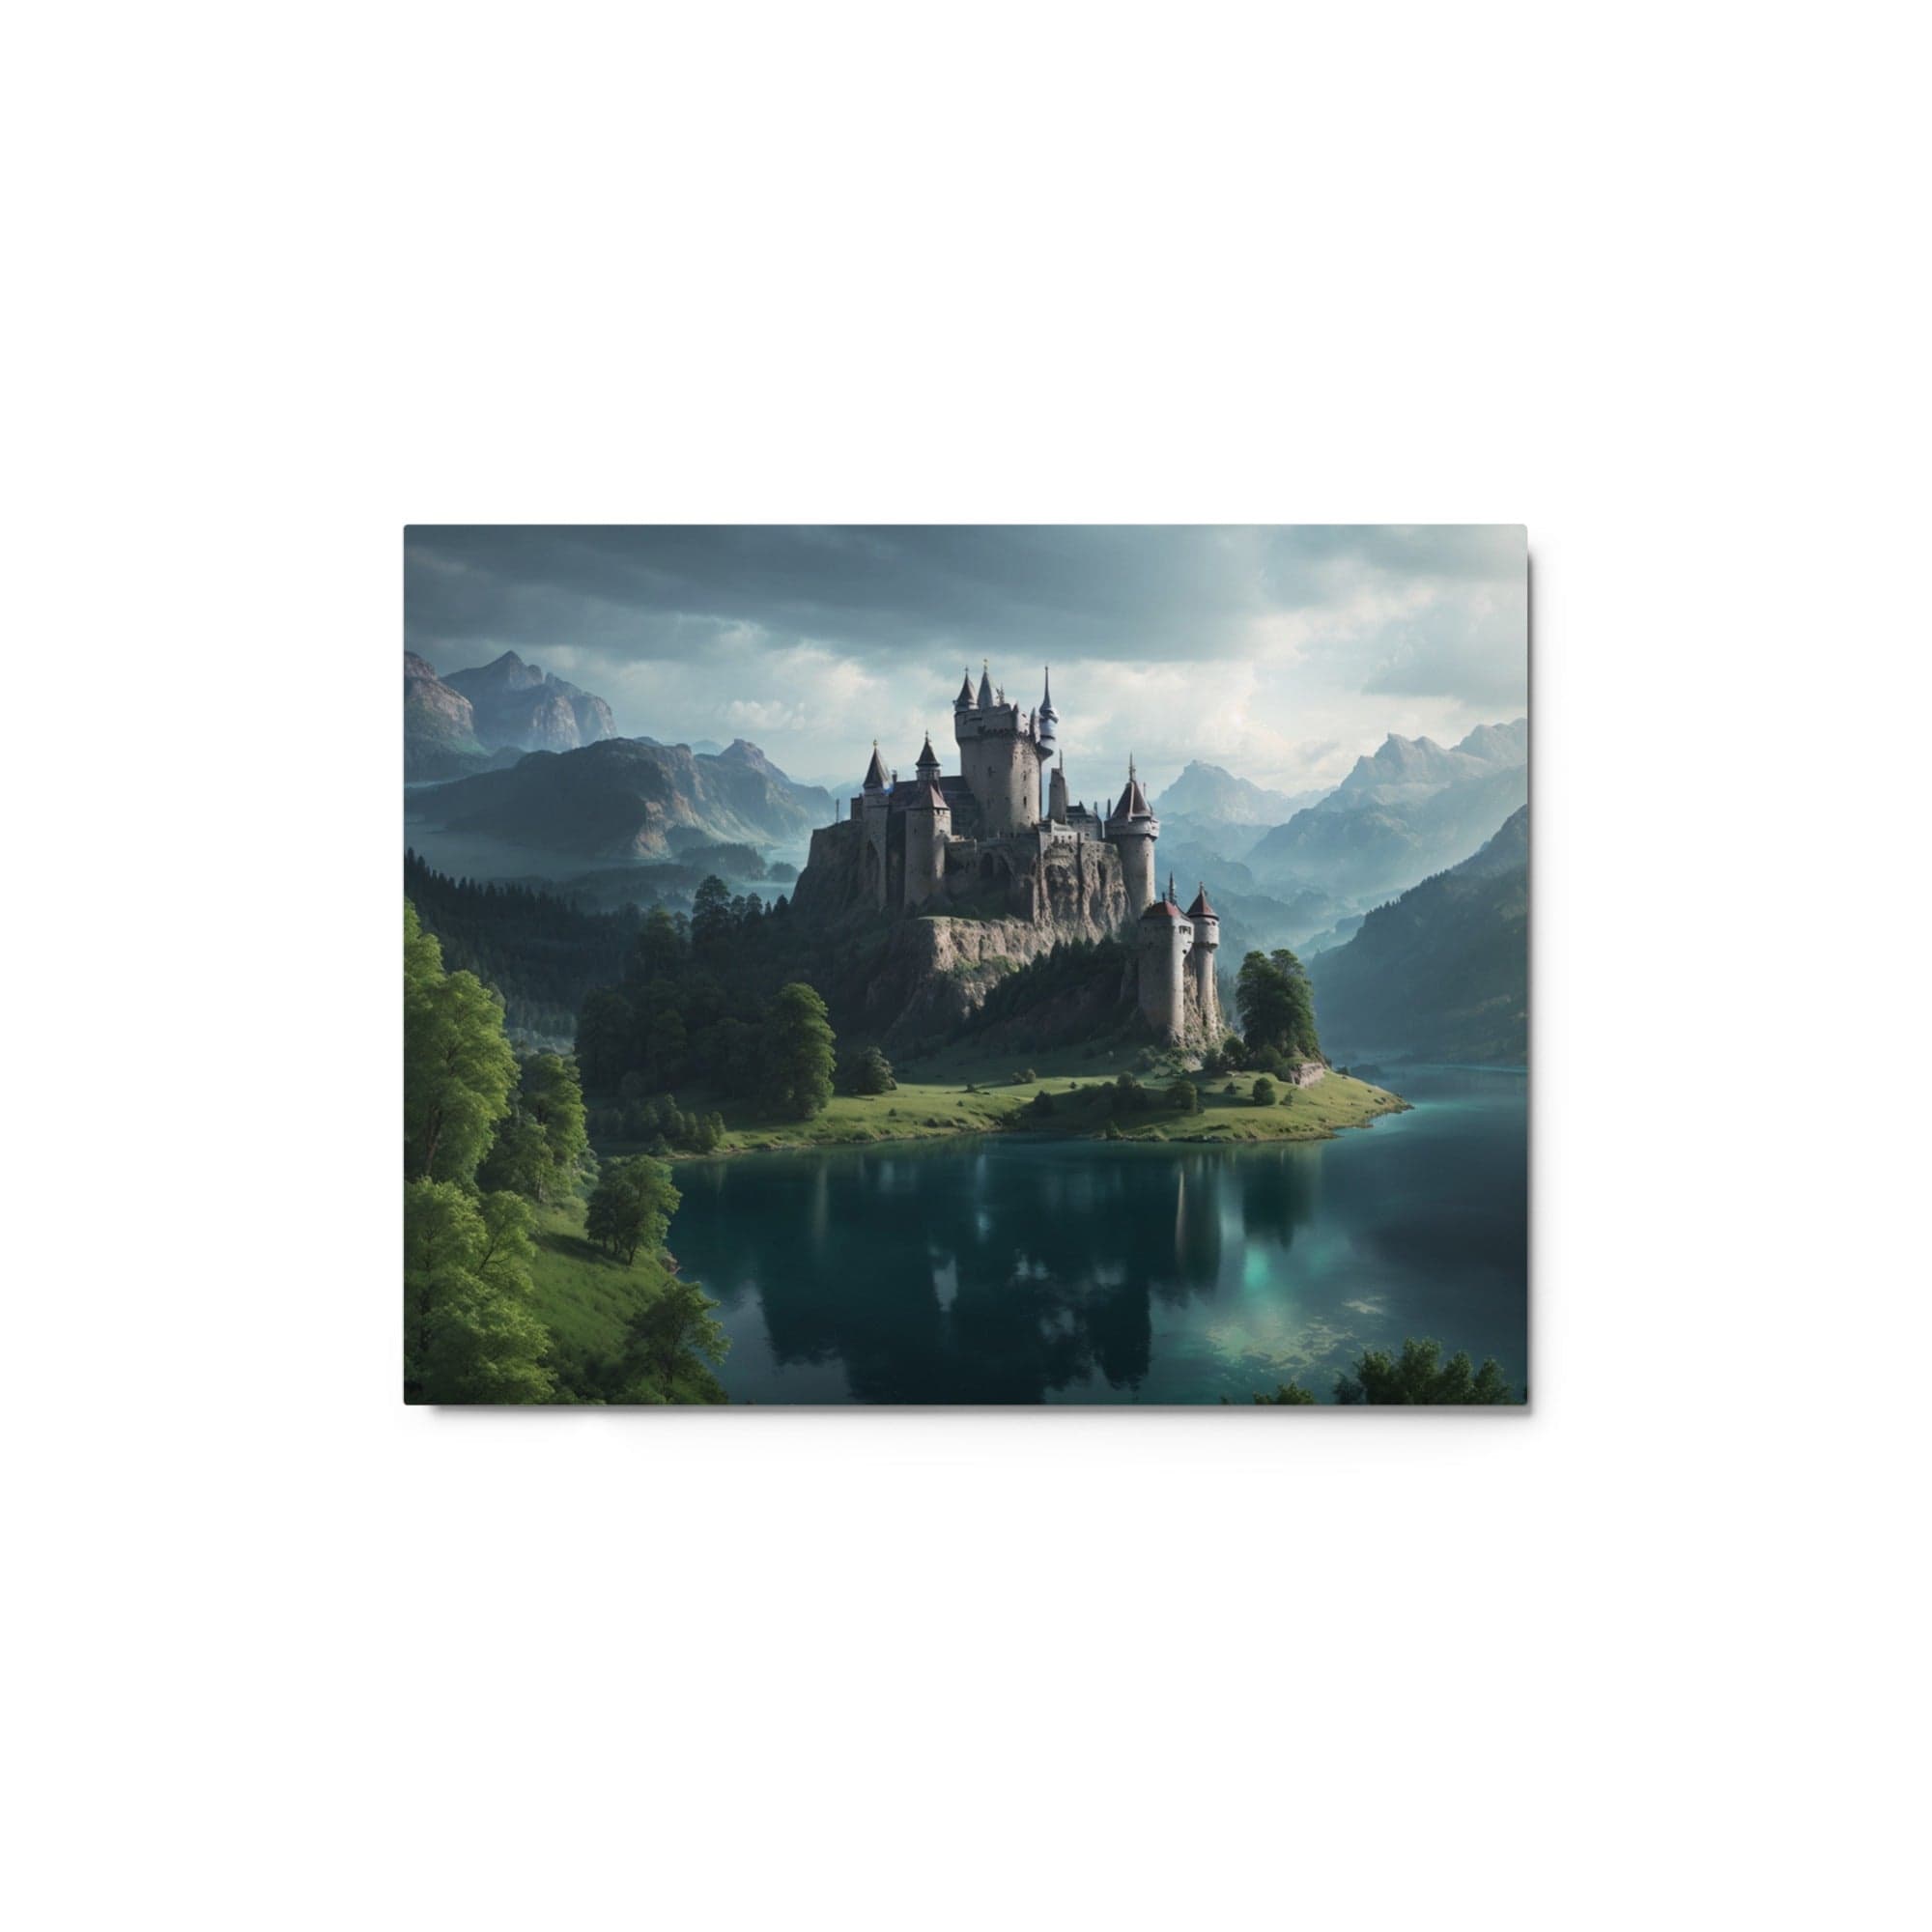 Moonrise Merchandise Home Decor 11″×14″ Metal Wall Art- English Castle on a hilltop over a lake 7636508_15136